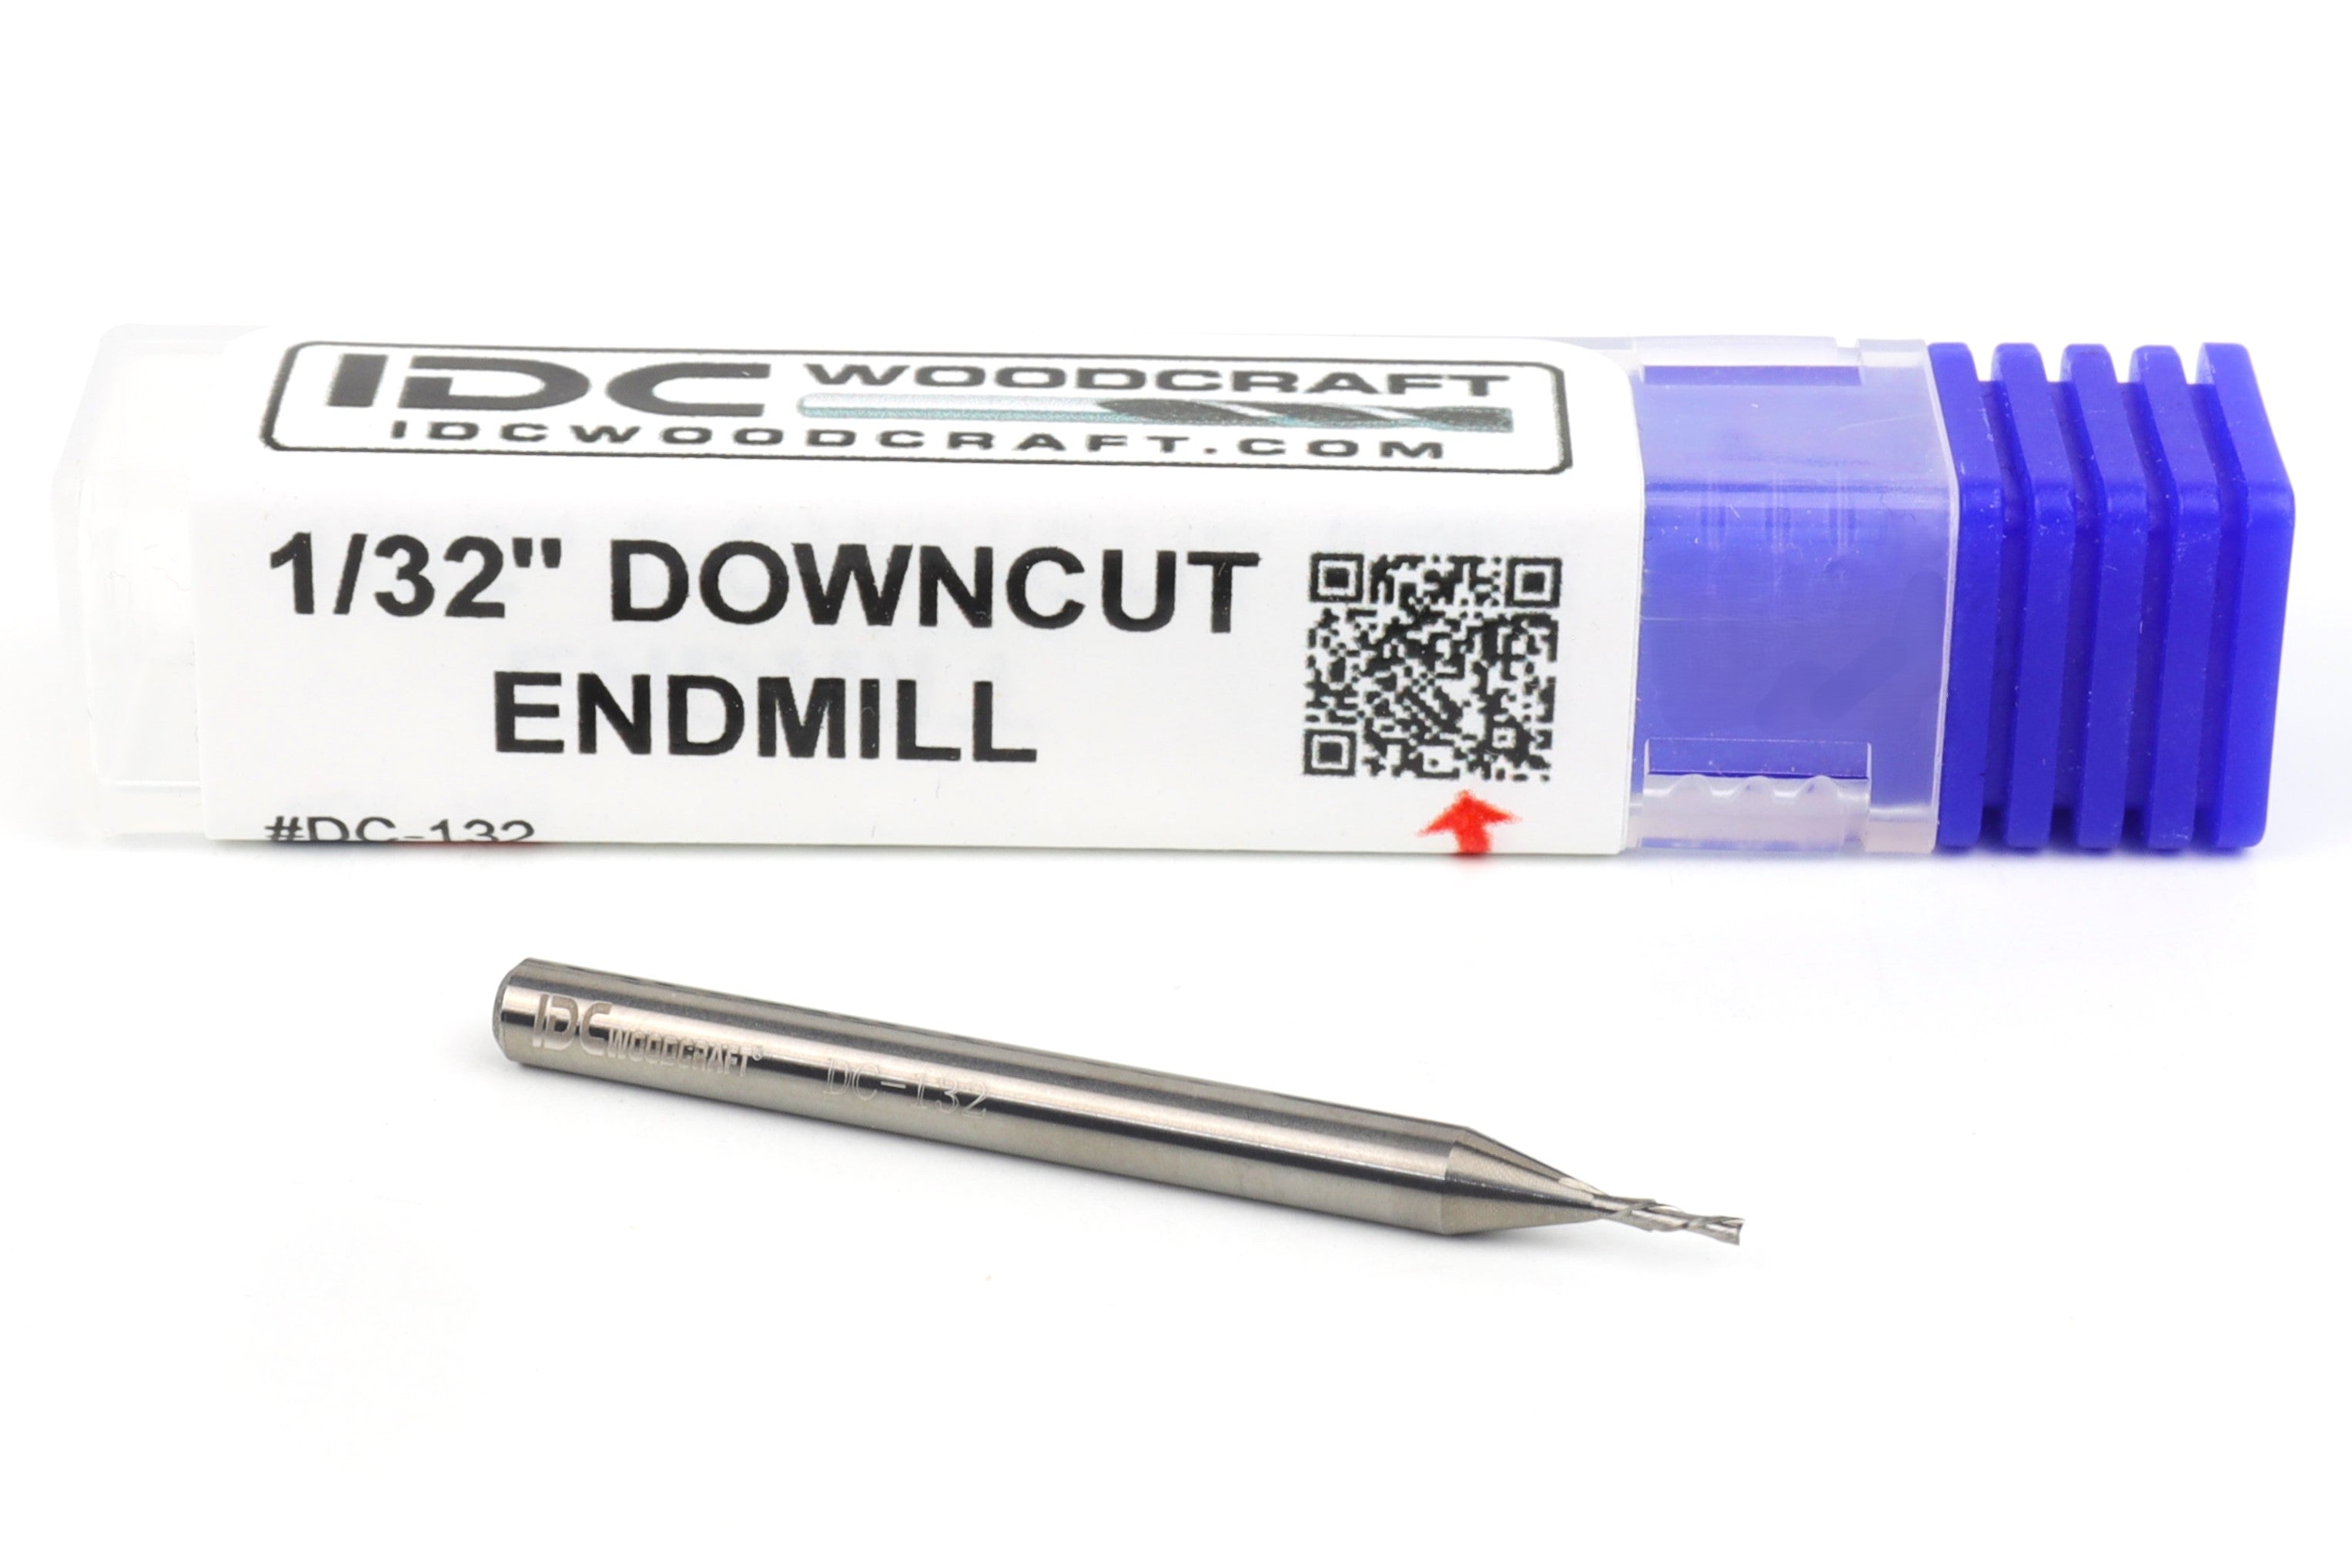 High-Detail 1/32 Down Cut Endmill Bit For CNC Routers, 1/8 Shank